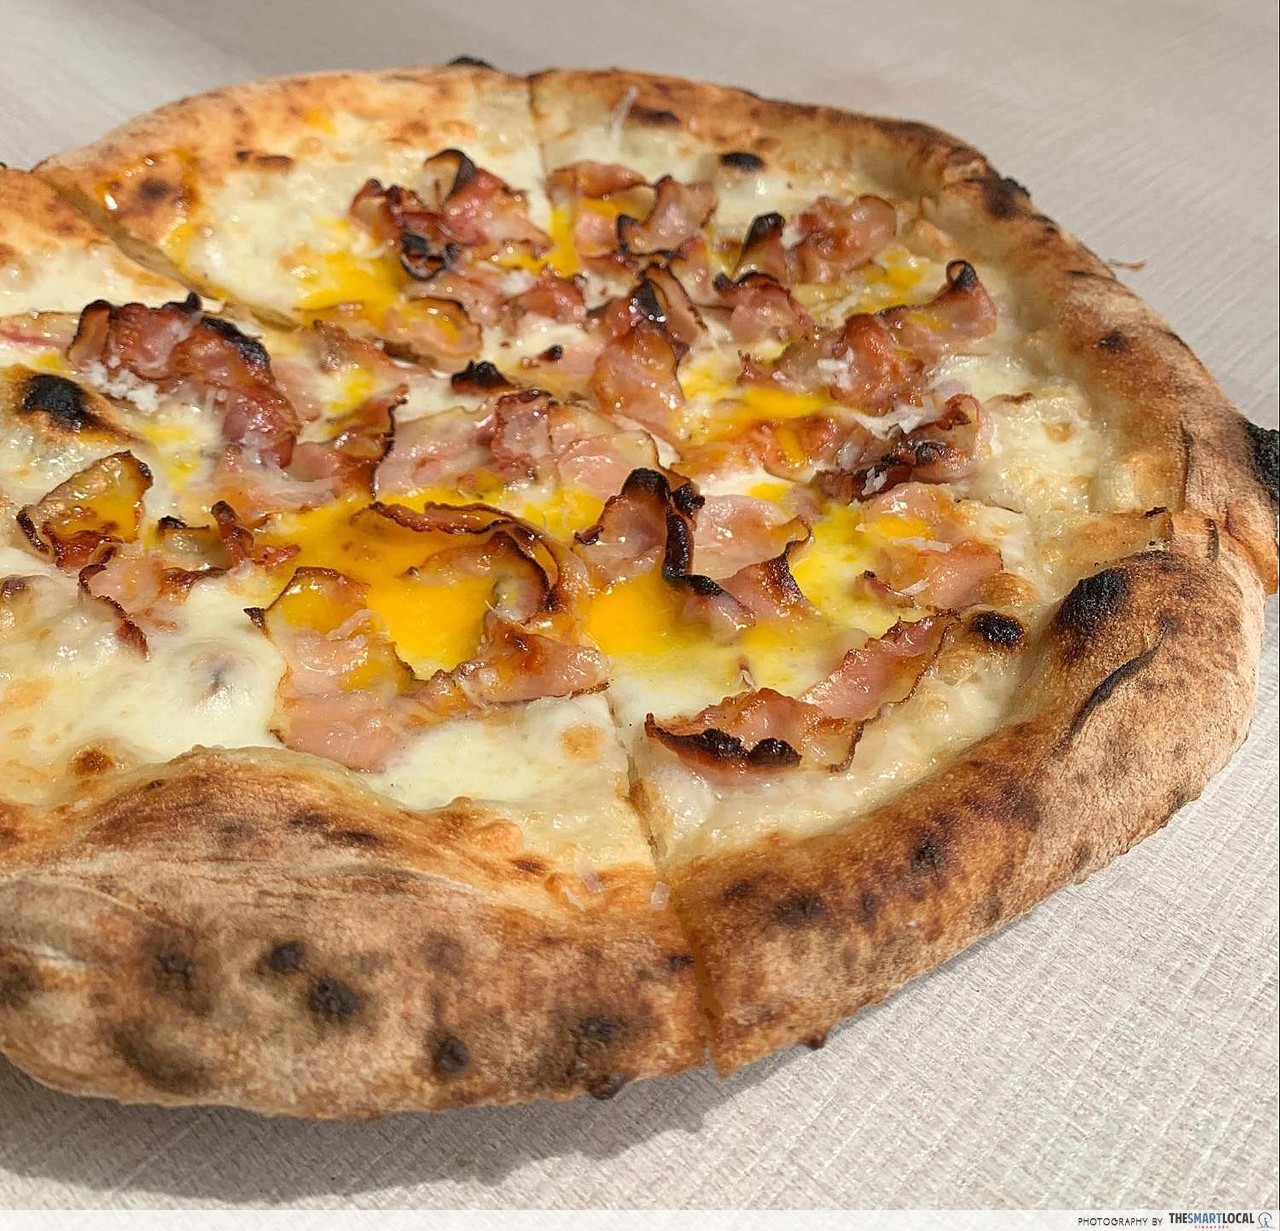 carbonara pizza at a mano italian restaurant